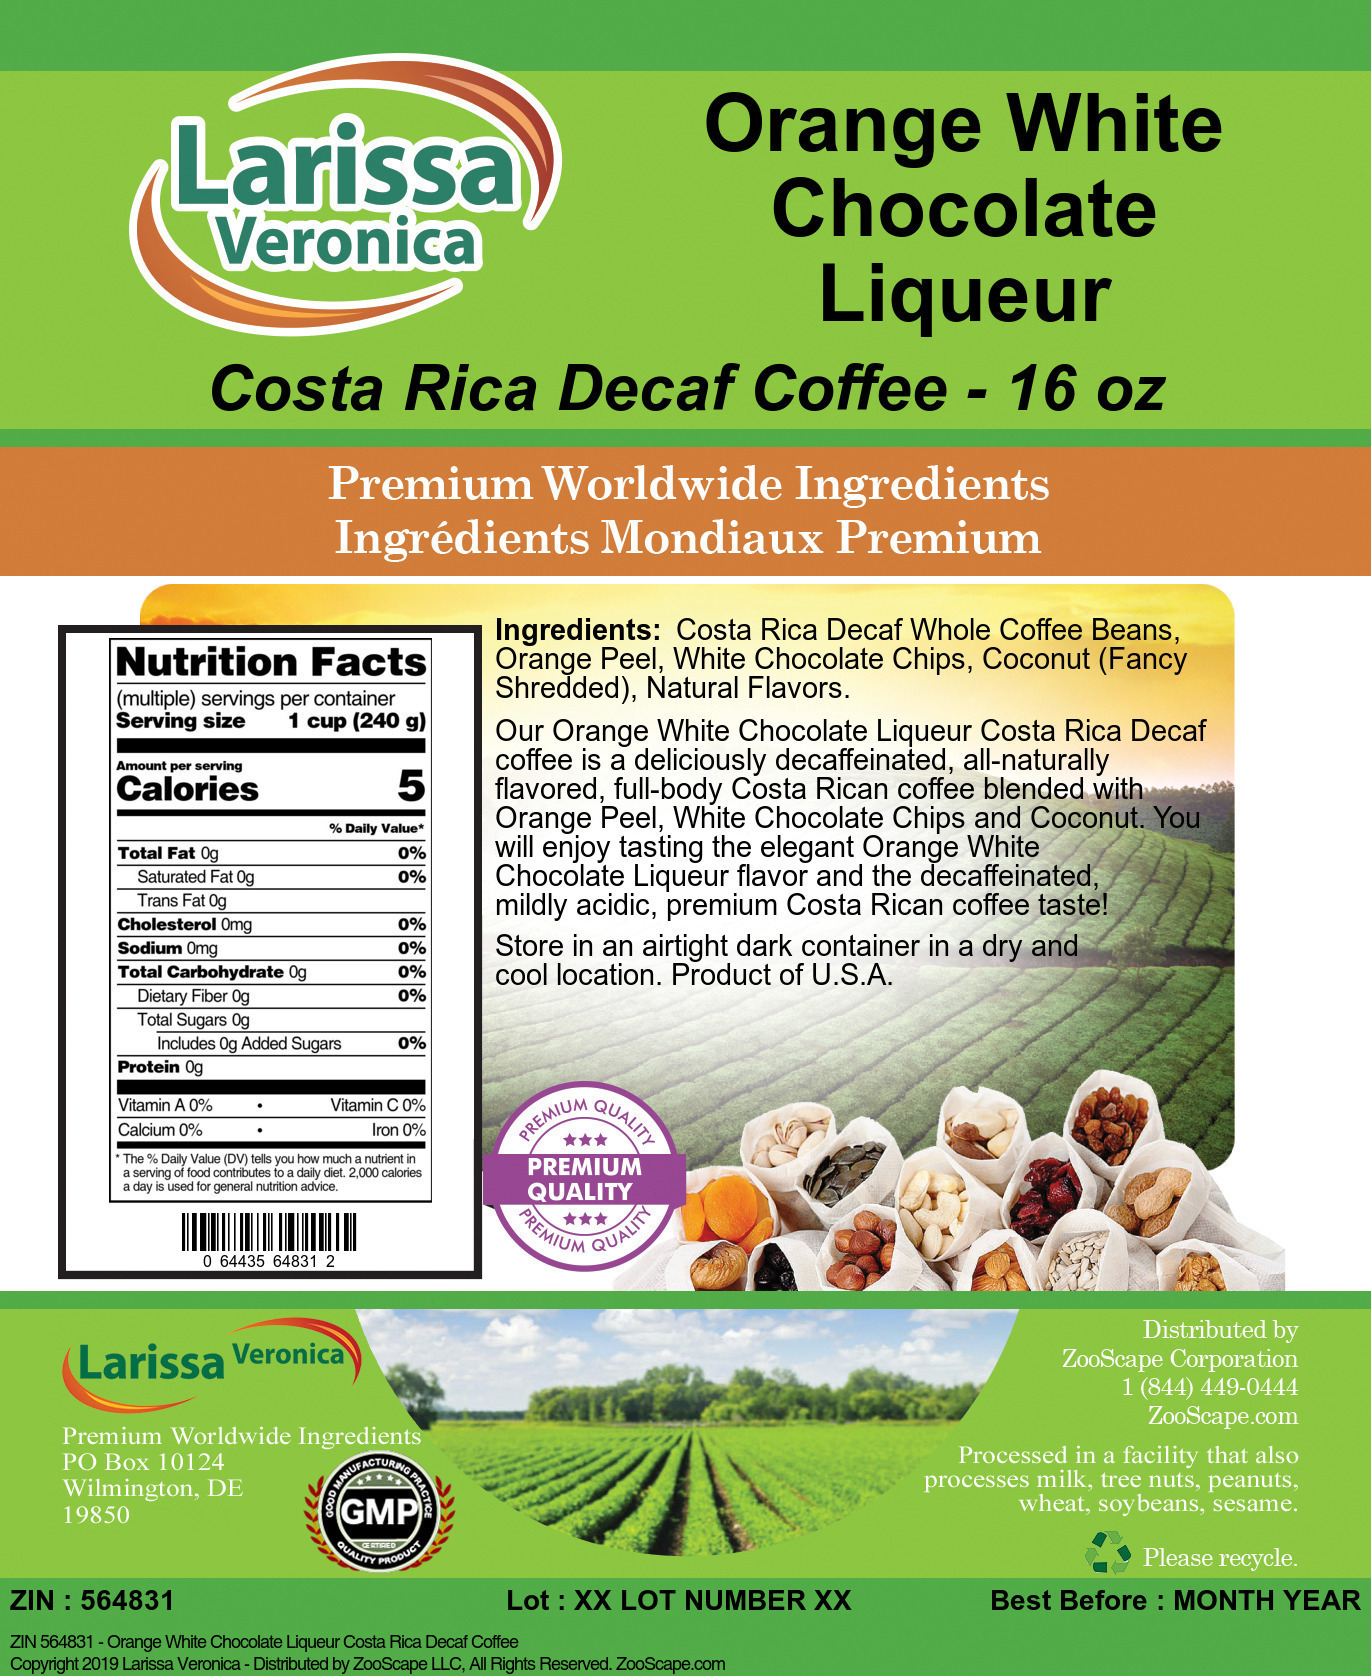 Orange White Chocolate Liqueur Costa Rica Decaf Coffee - Label